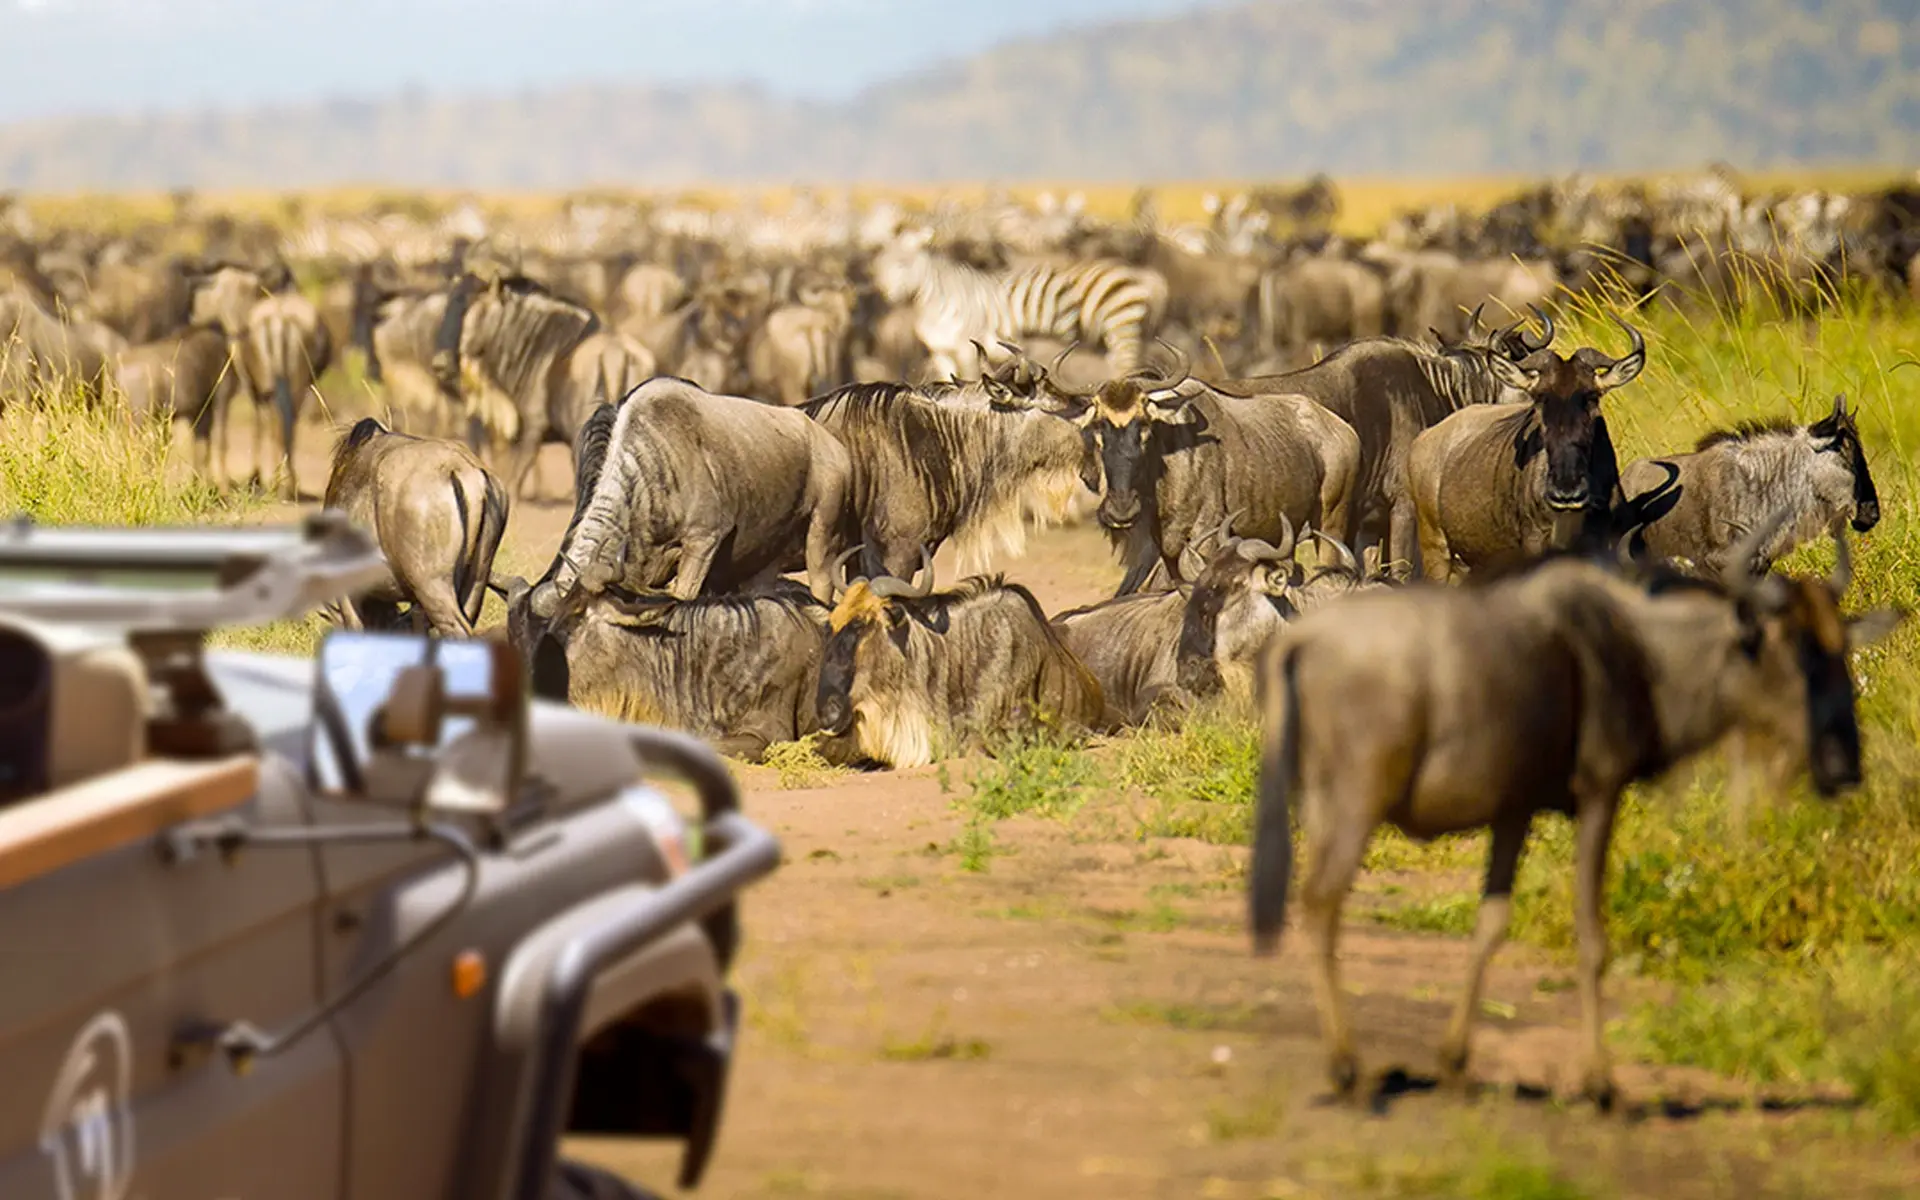 Gnus and zebras onlooking the safari game vehicle at the Serengeti National Park, Tanzania.